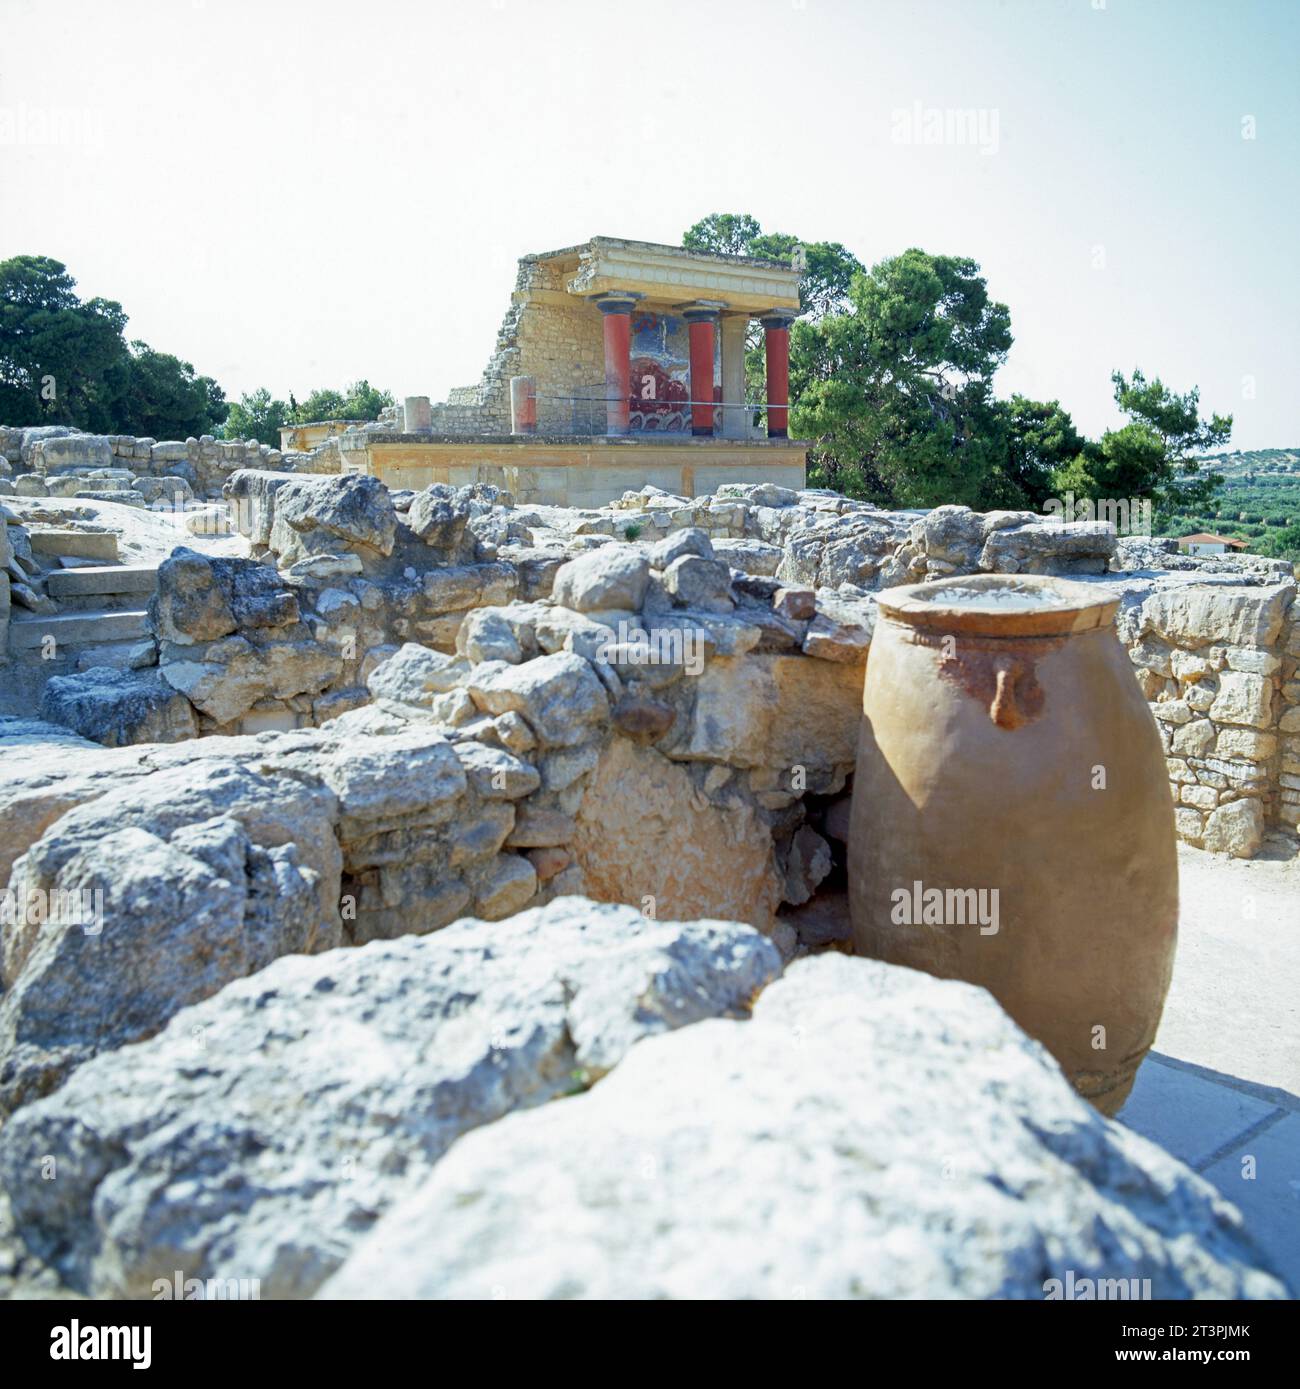 Cnosso, Kreta: Blick über Mauerreste mit einer Amphore auf den rekonstruierten Nordwestportikus * sito archeologico di Cnosso con portico a nord-ovest Foto Stock